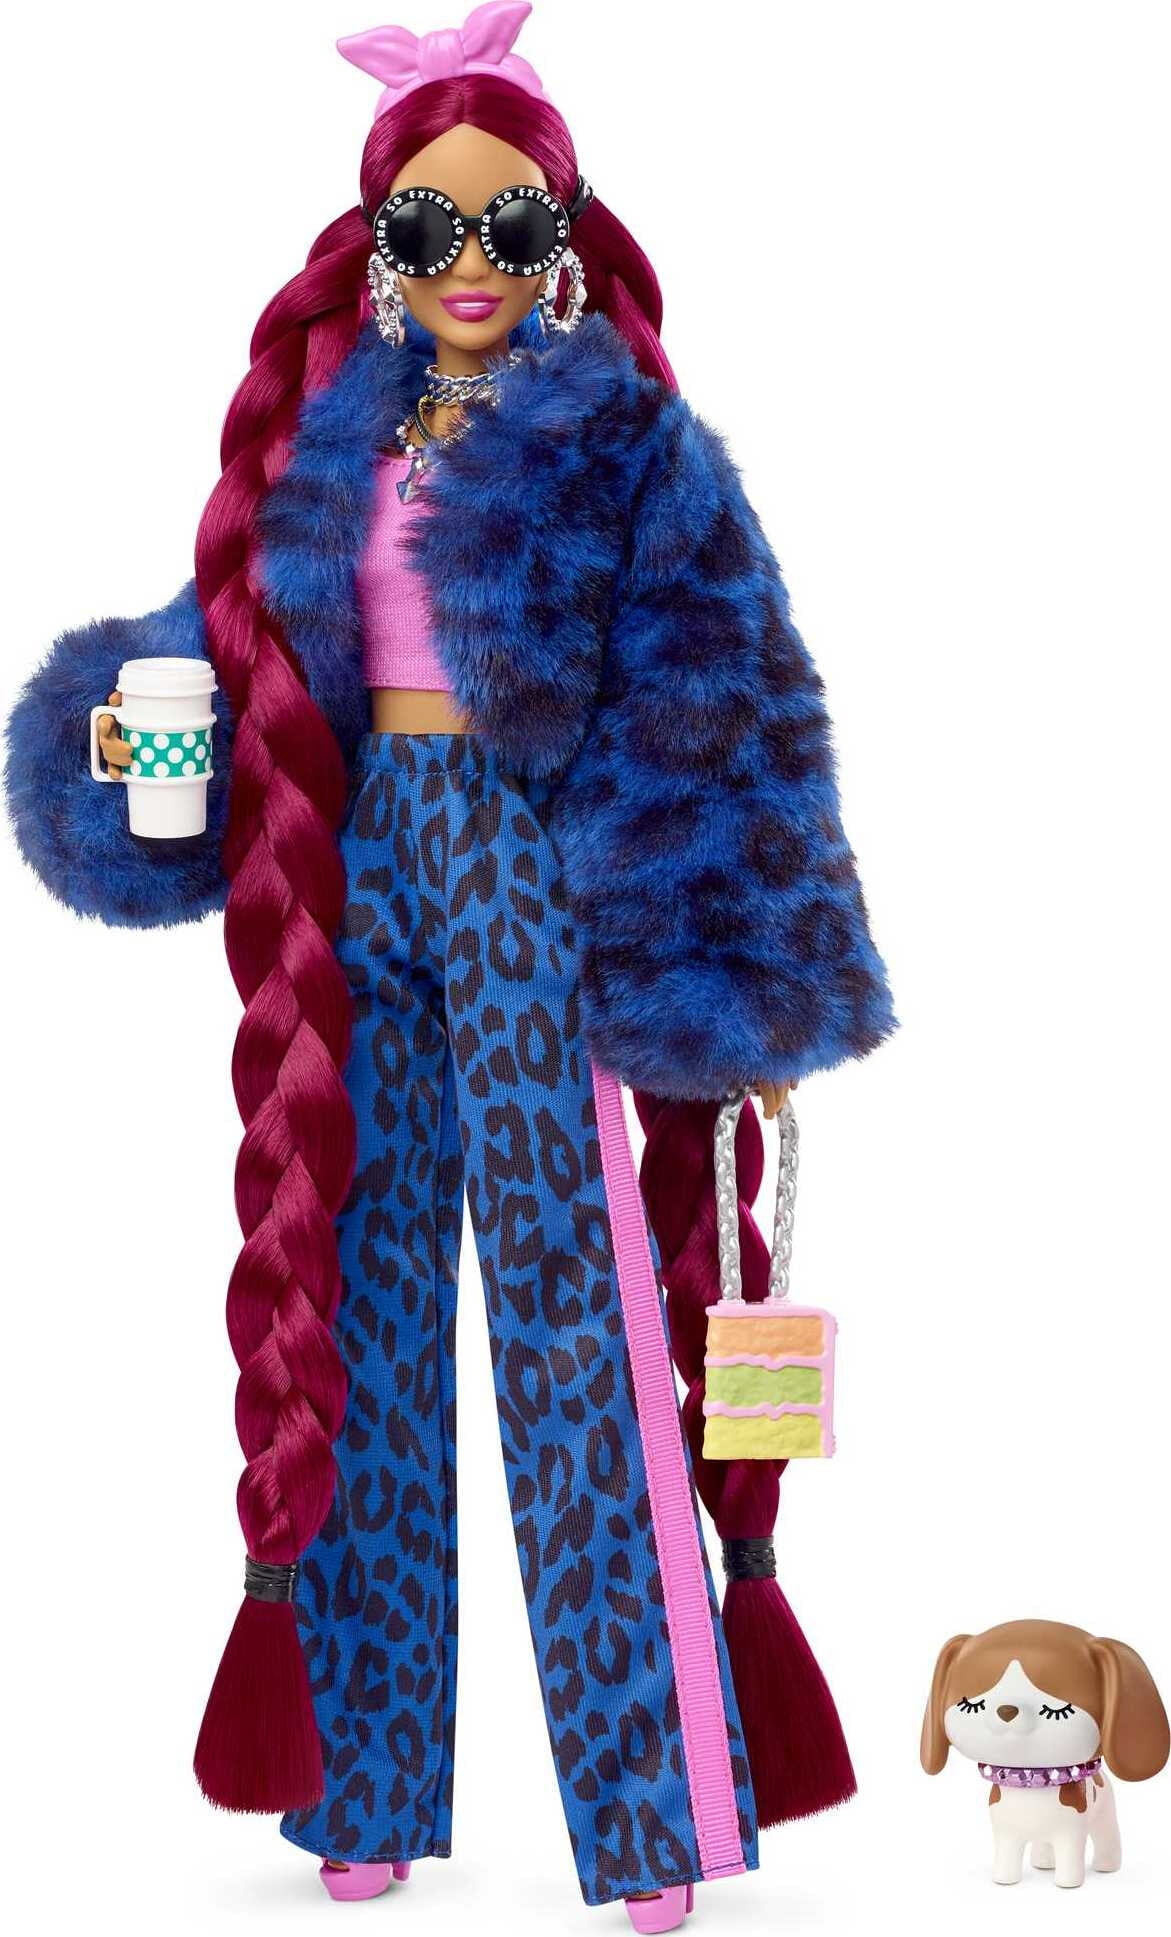 Barbie Extra Fashion Doll with Burgundy Braids in Furry Jacket